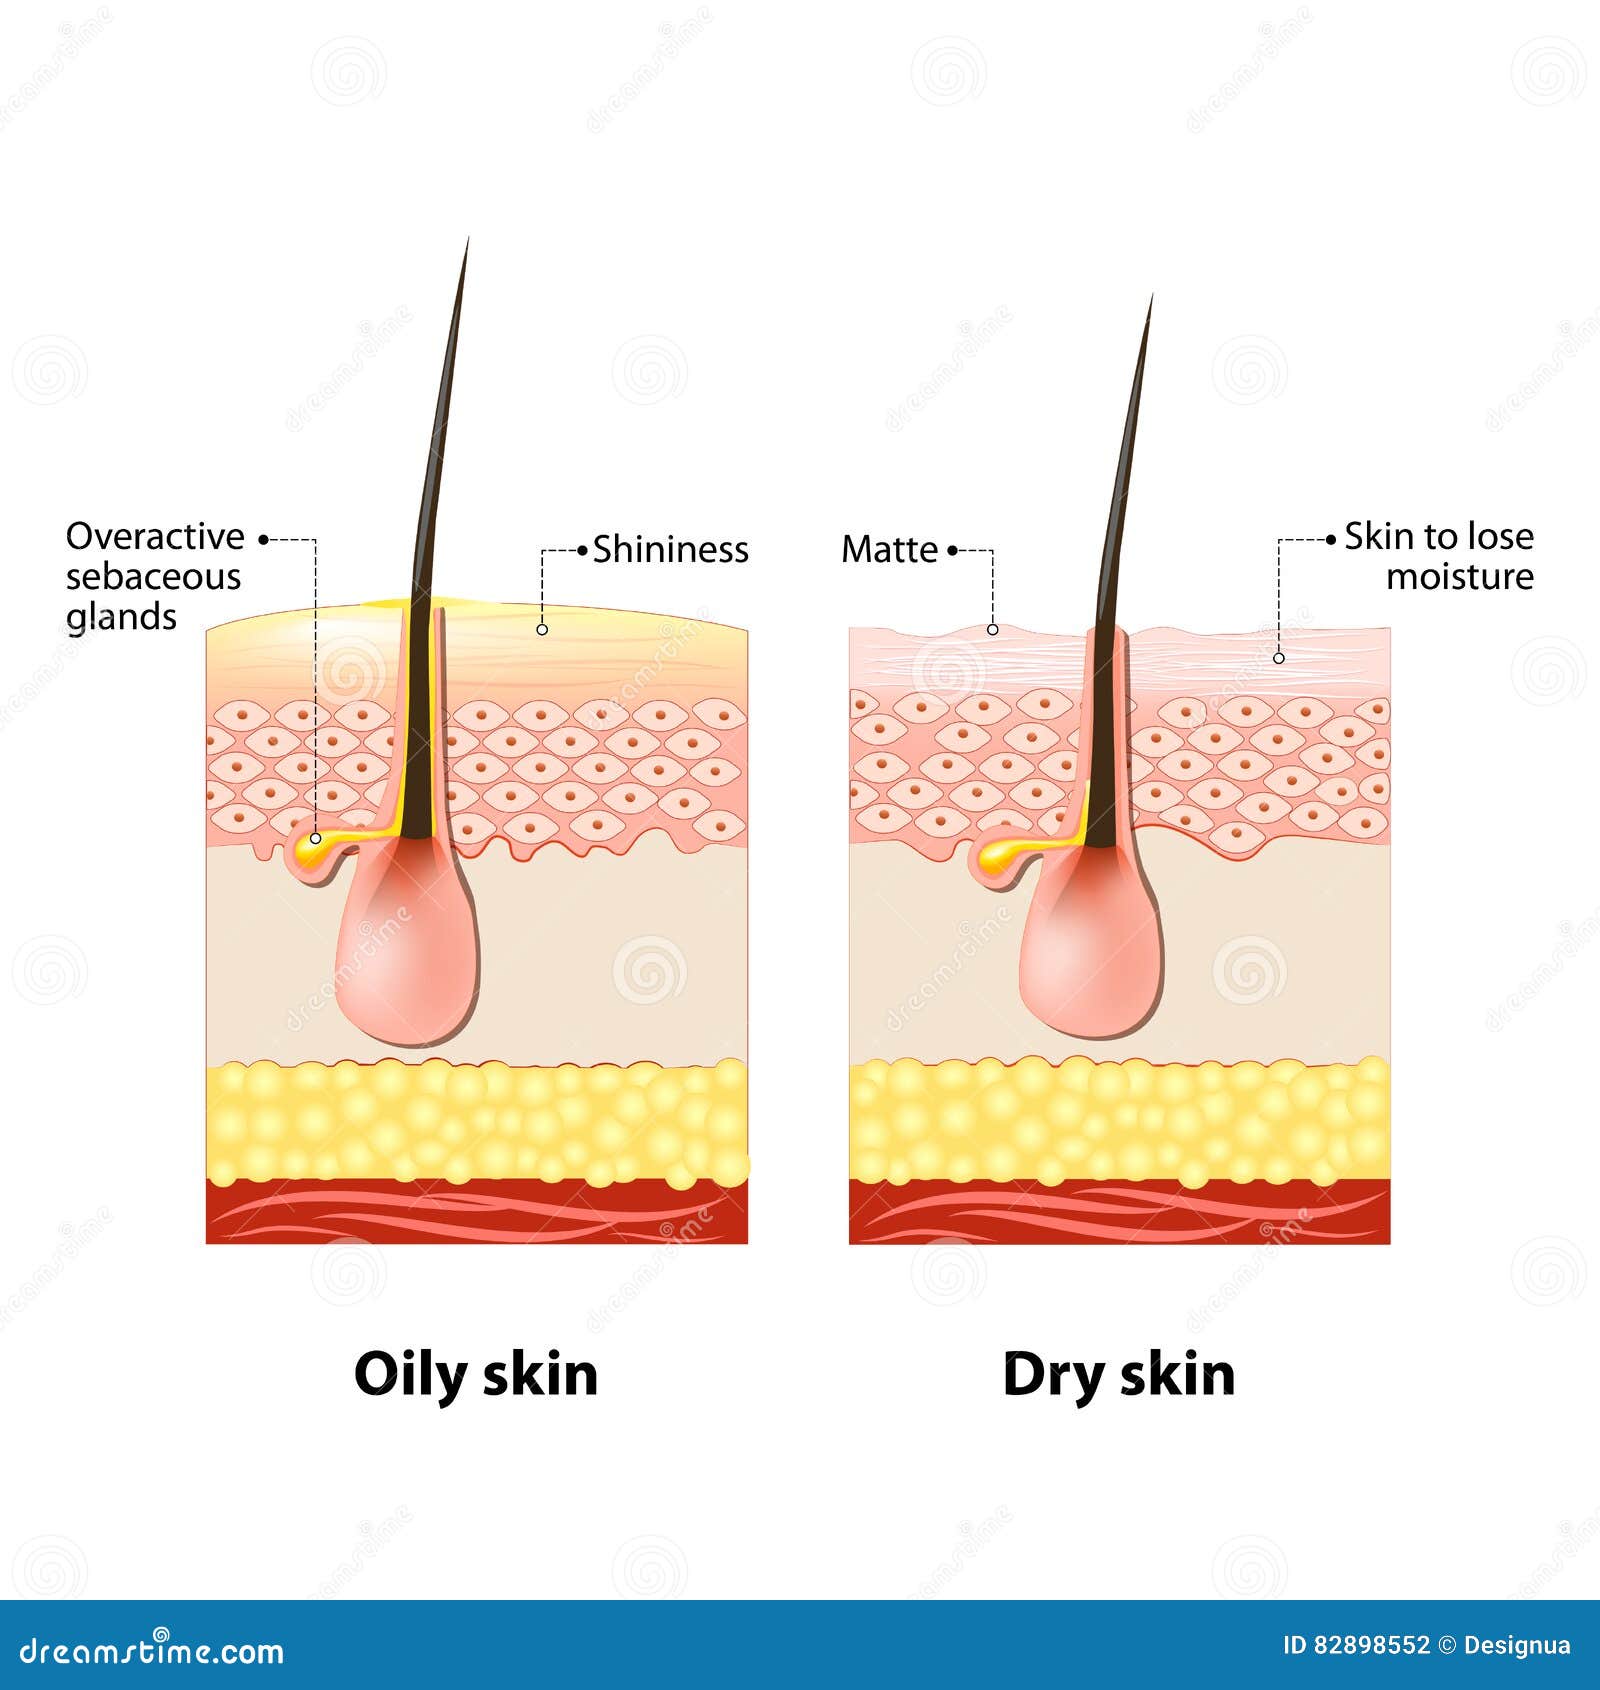 oily & dry skin